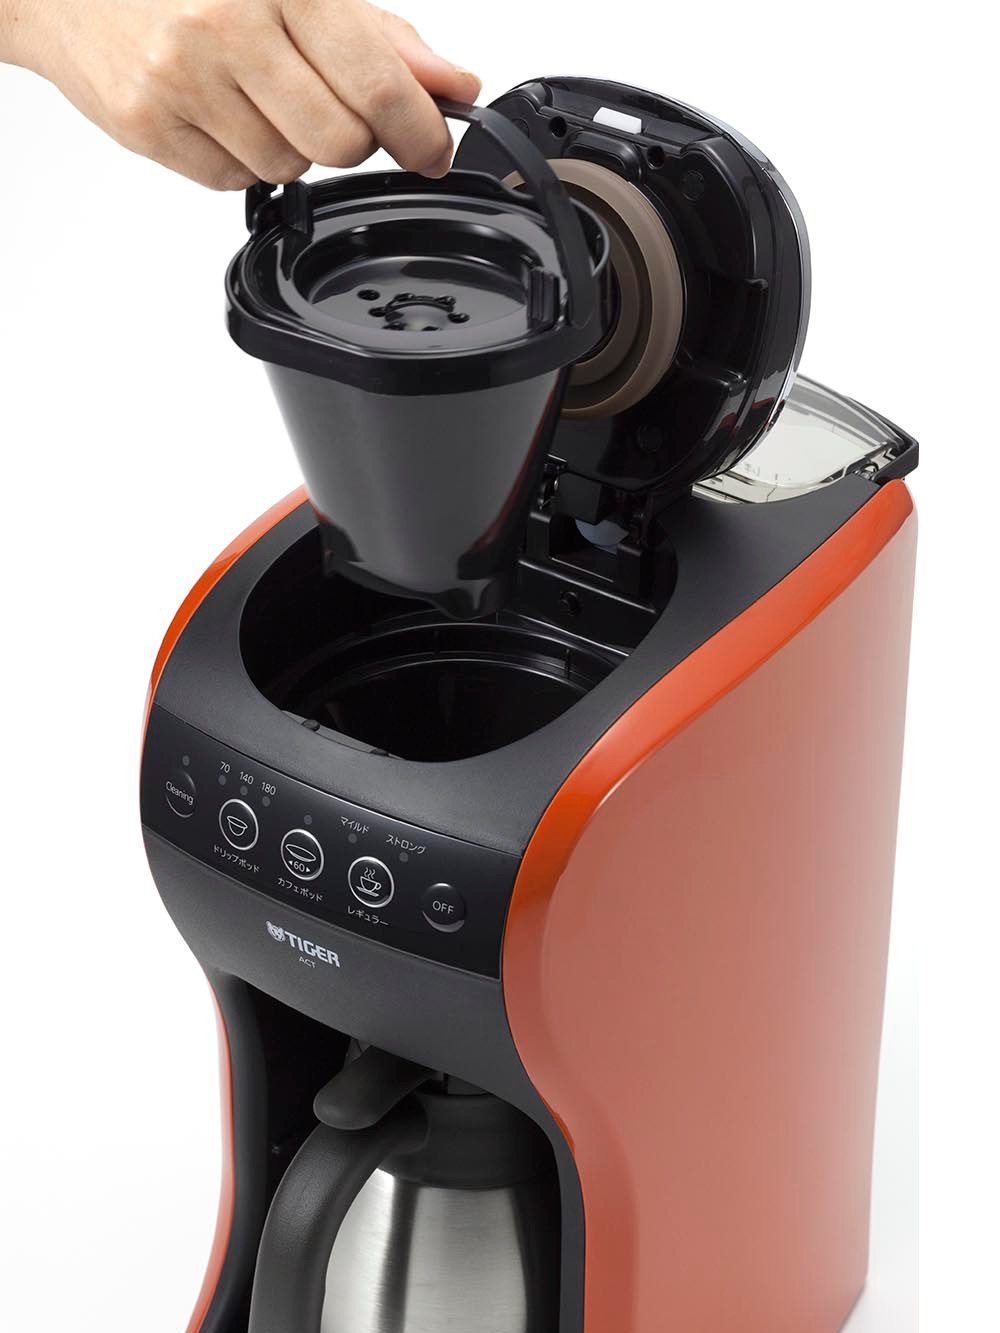 Mua タイガー コーヒーメーカー 4杯用 真空 ステンレス サーバー ローストブラウン カフェバリエ ACT-B040-TS trên Amazon  Nhật chính hãng 2023 Fado